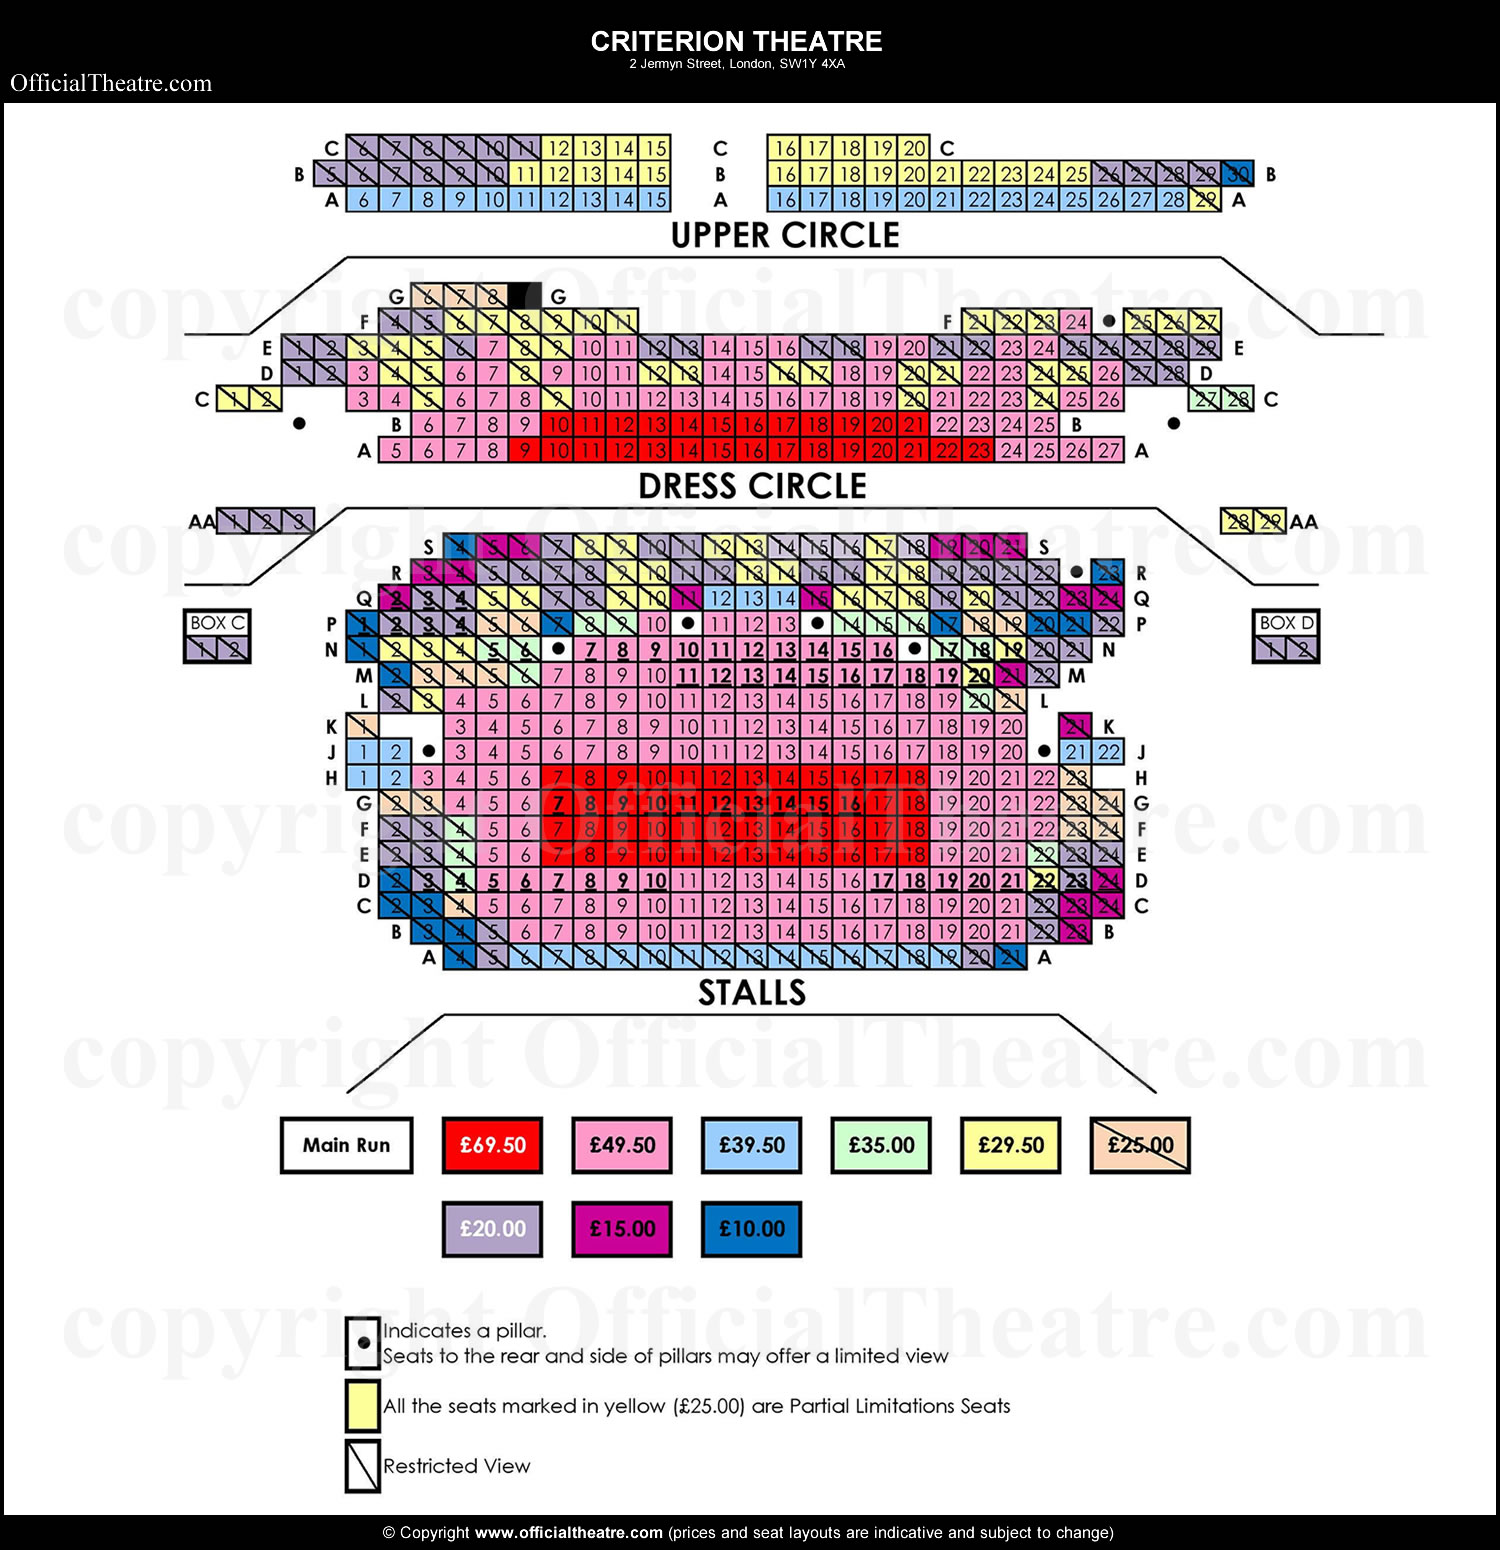 Criterion Theatre seating plan